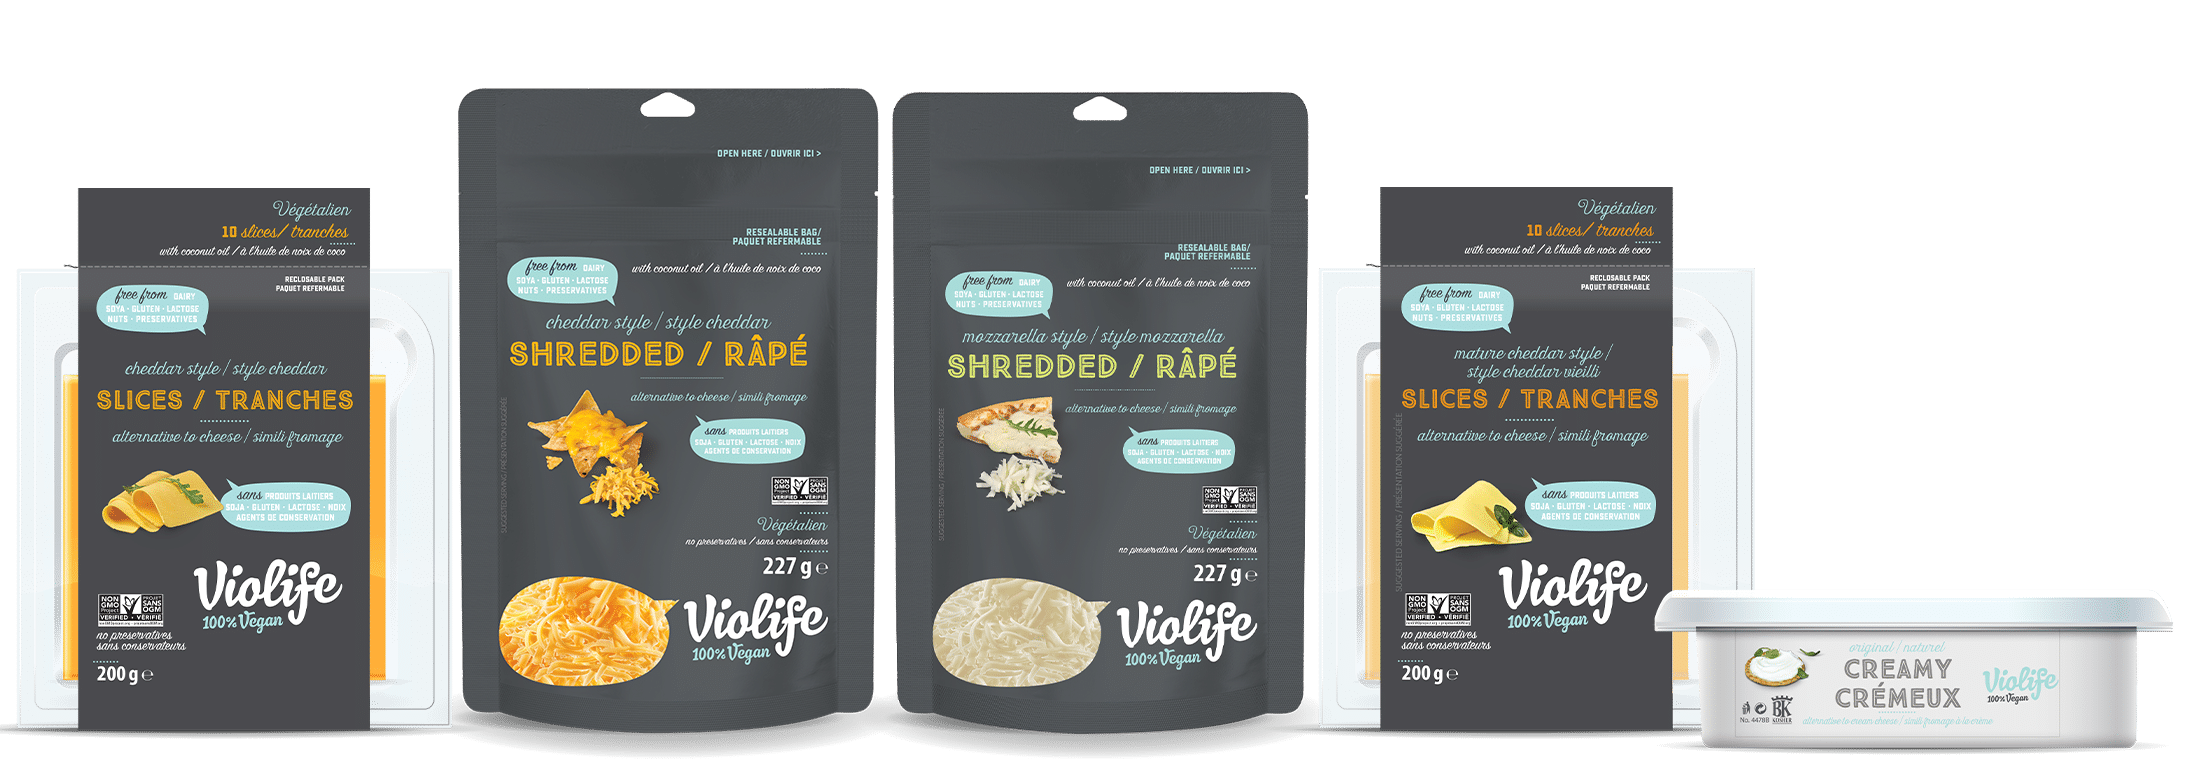 violife fromage vegan echantillon gratuit